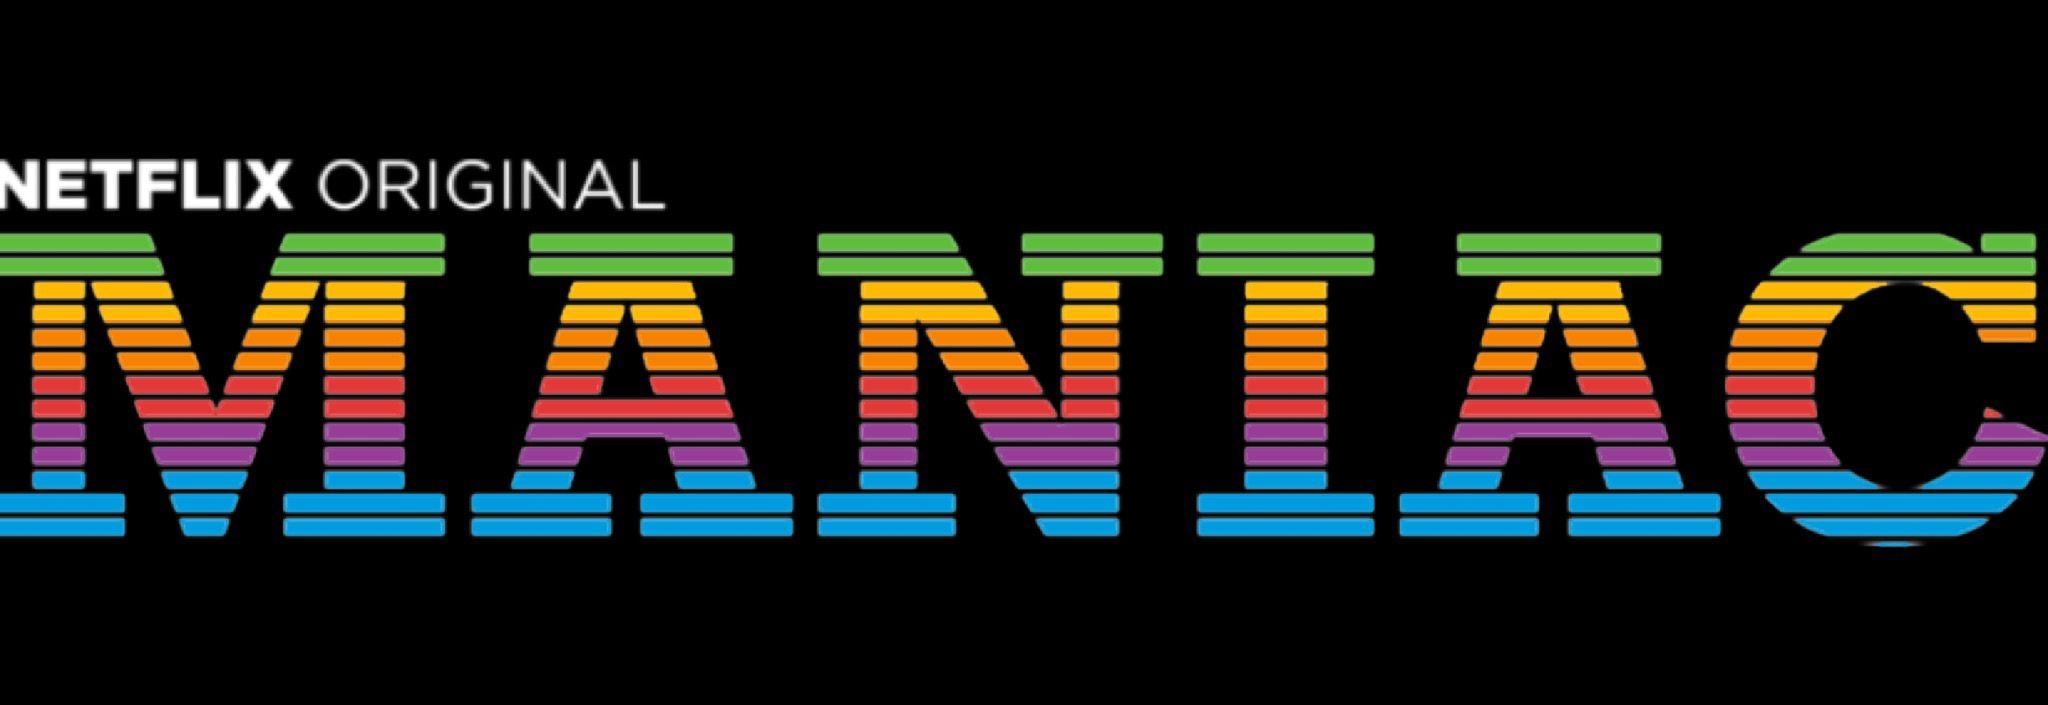 Maniac Logo - apple logo colored maniac logo - Album on Imgur